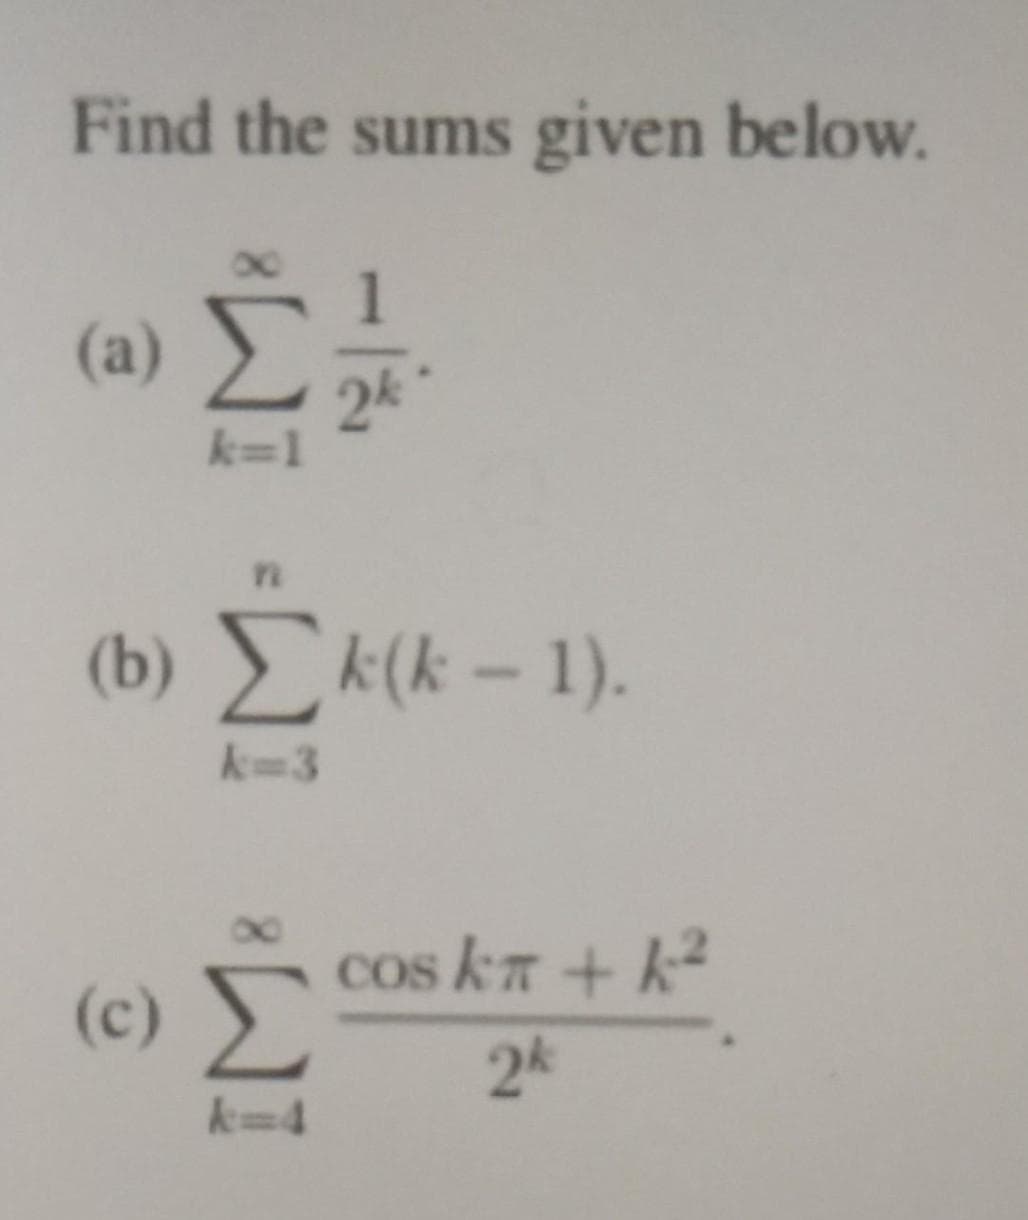 Find the sums given below.
1
(a)
k=1
(b) k(k – 1).
k-3
cos kT + k2
24
(c)
k=D4
